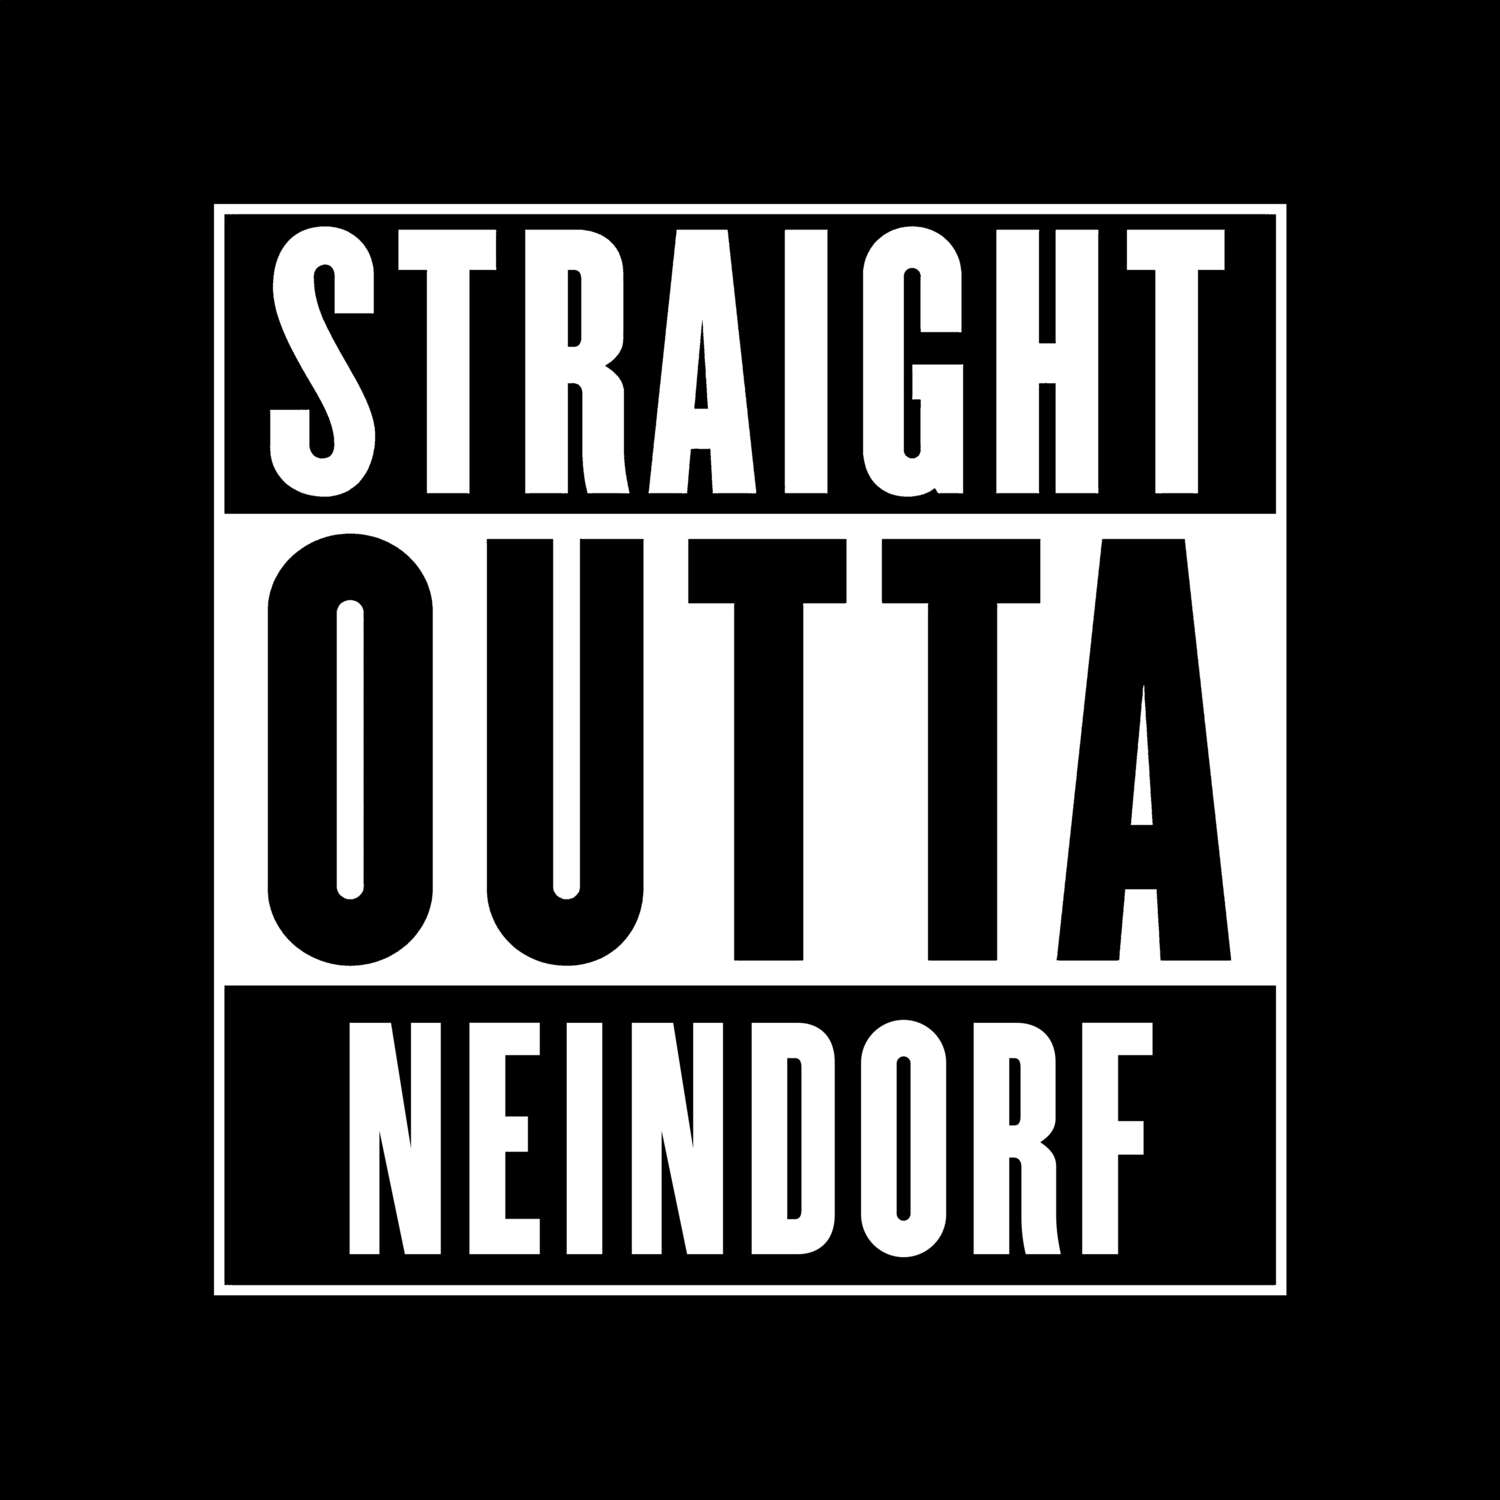 Neindorf T-Shirt »Straight Outta«